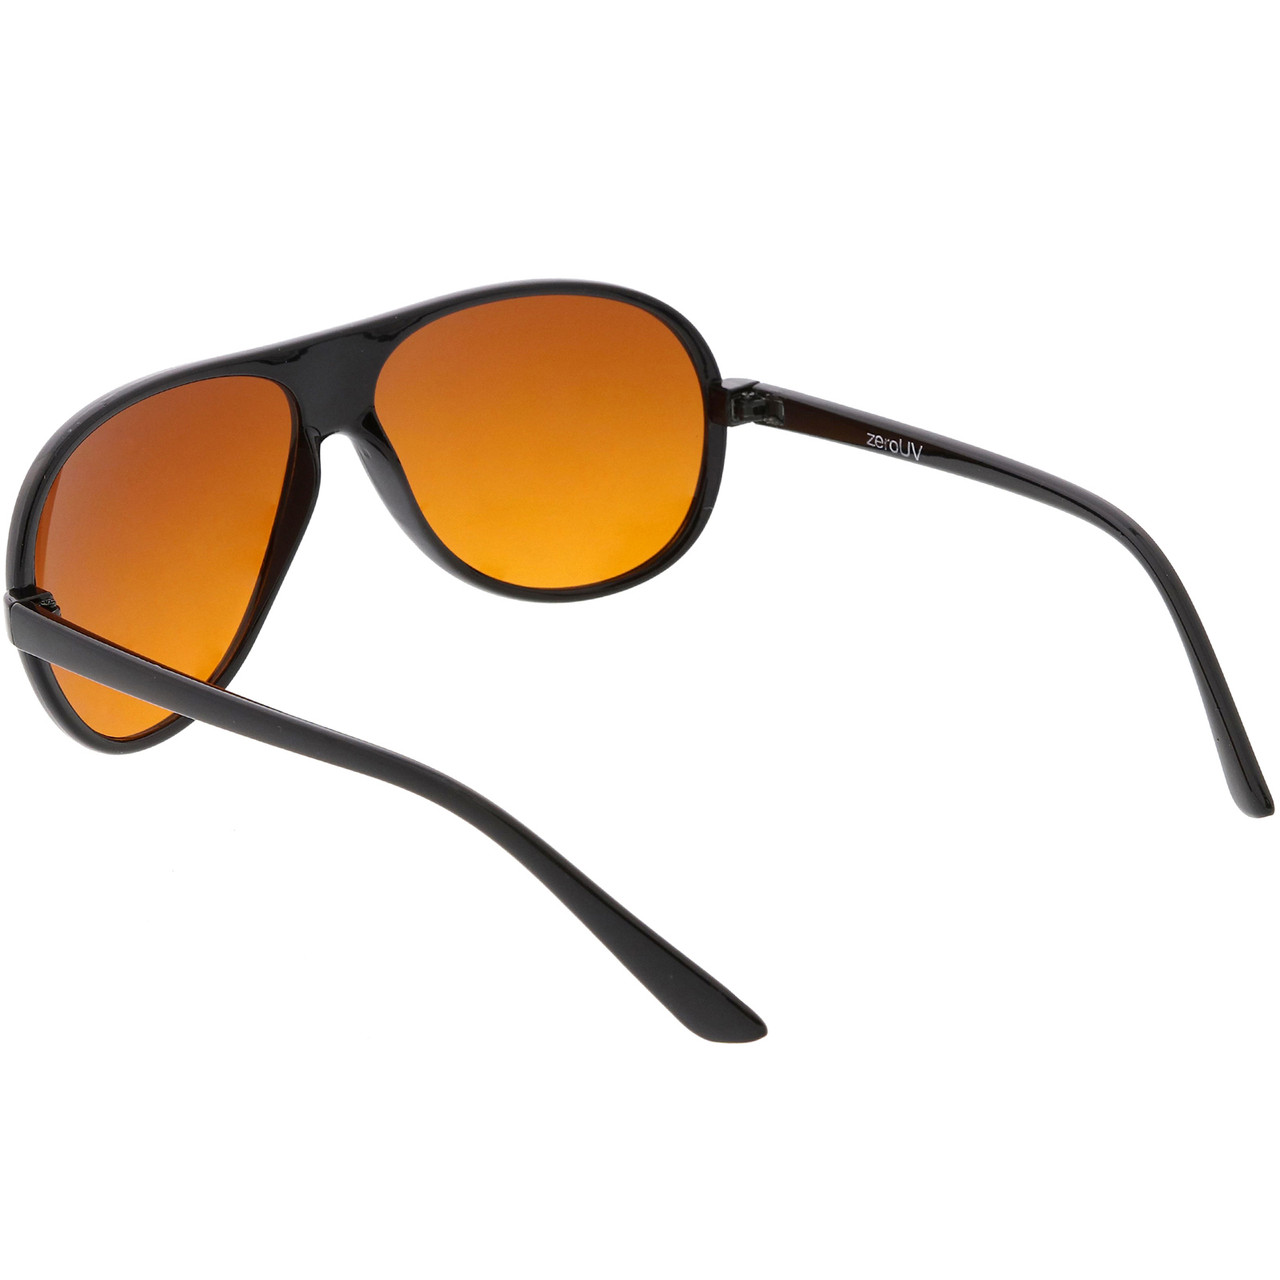 Retro Modern Gradient Flat Lens Aviator Sunglasses - zeroUV